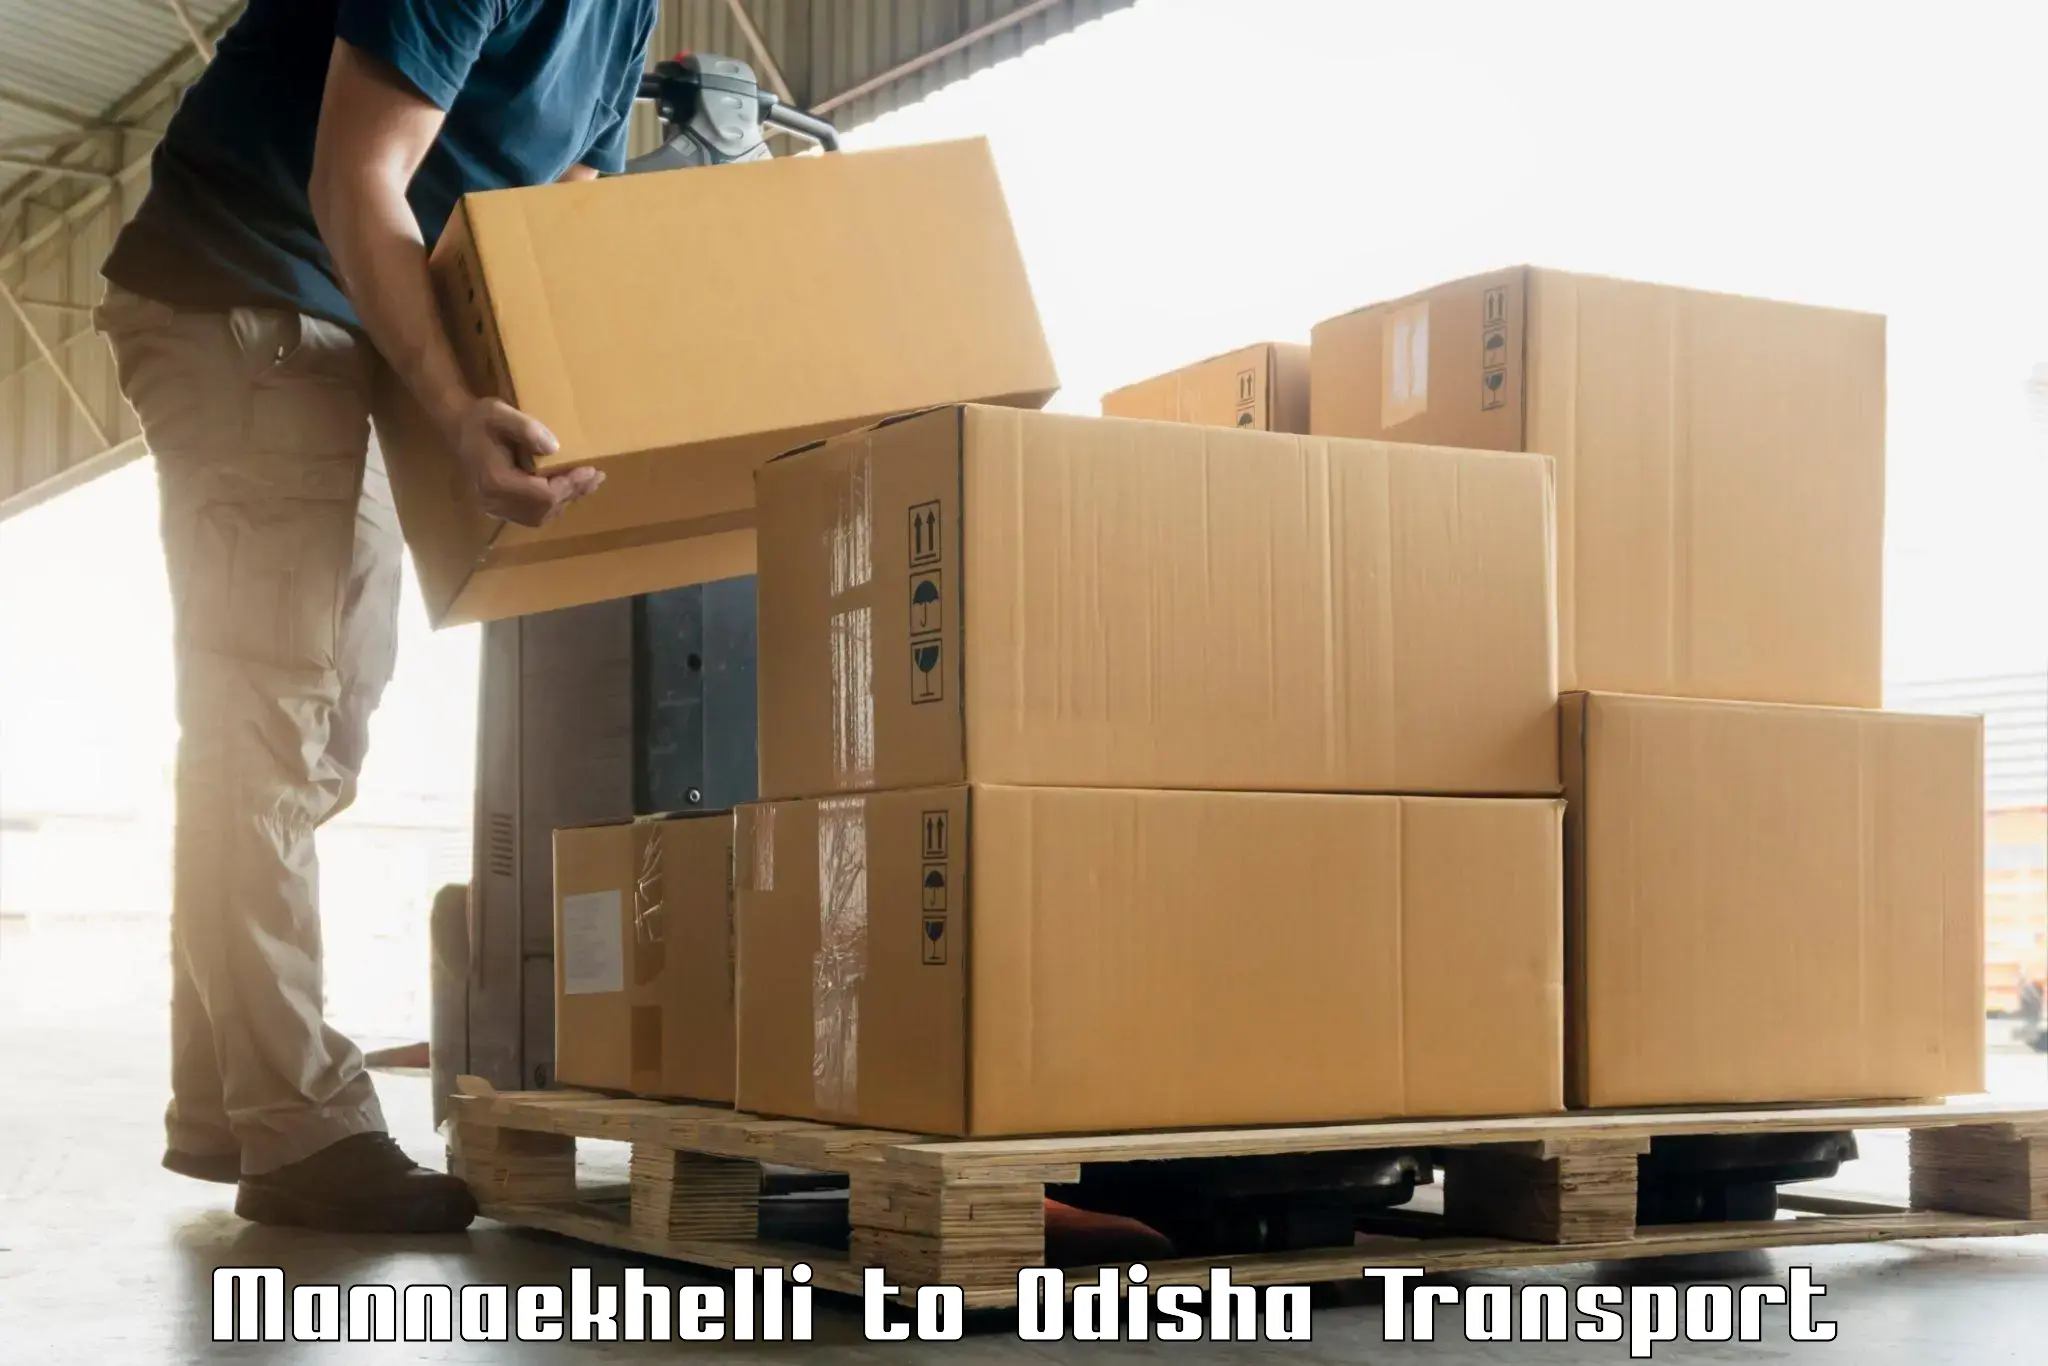 Transport shared services Mannaekhelli to Odisha